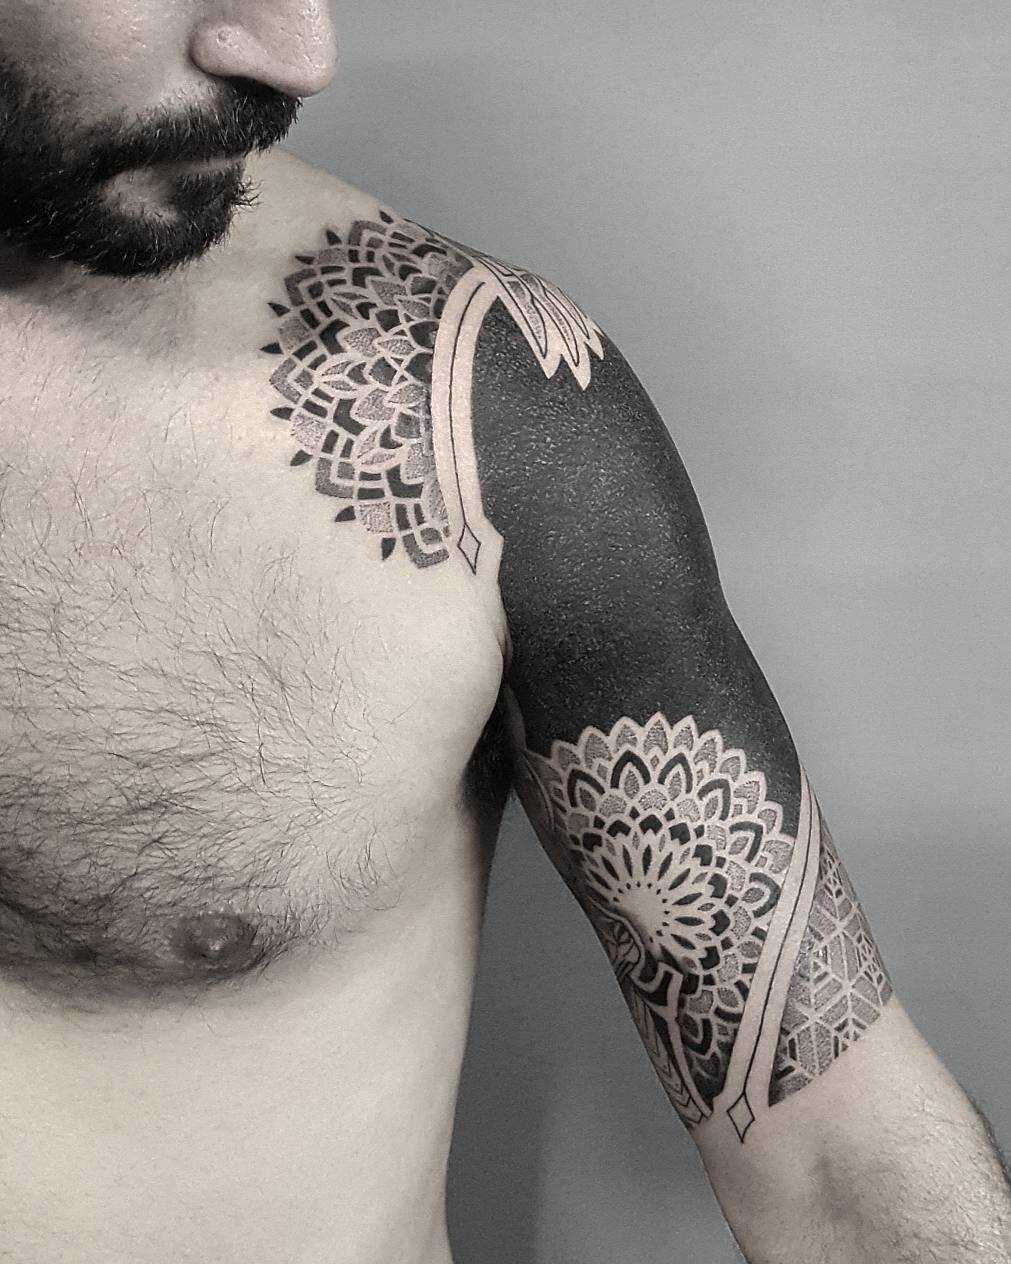 Dot-work half sleeve tattoo